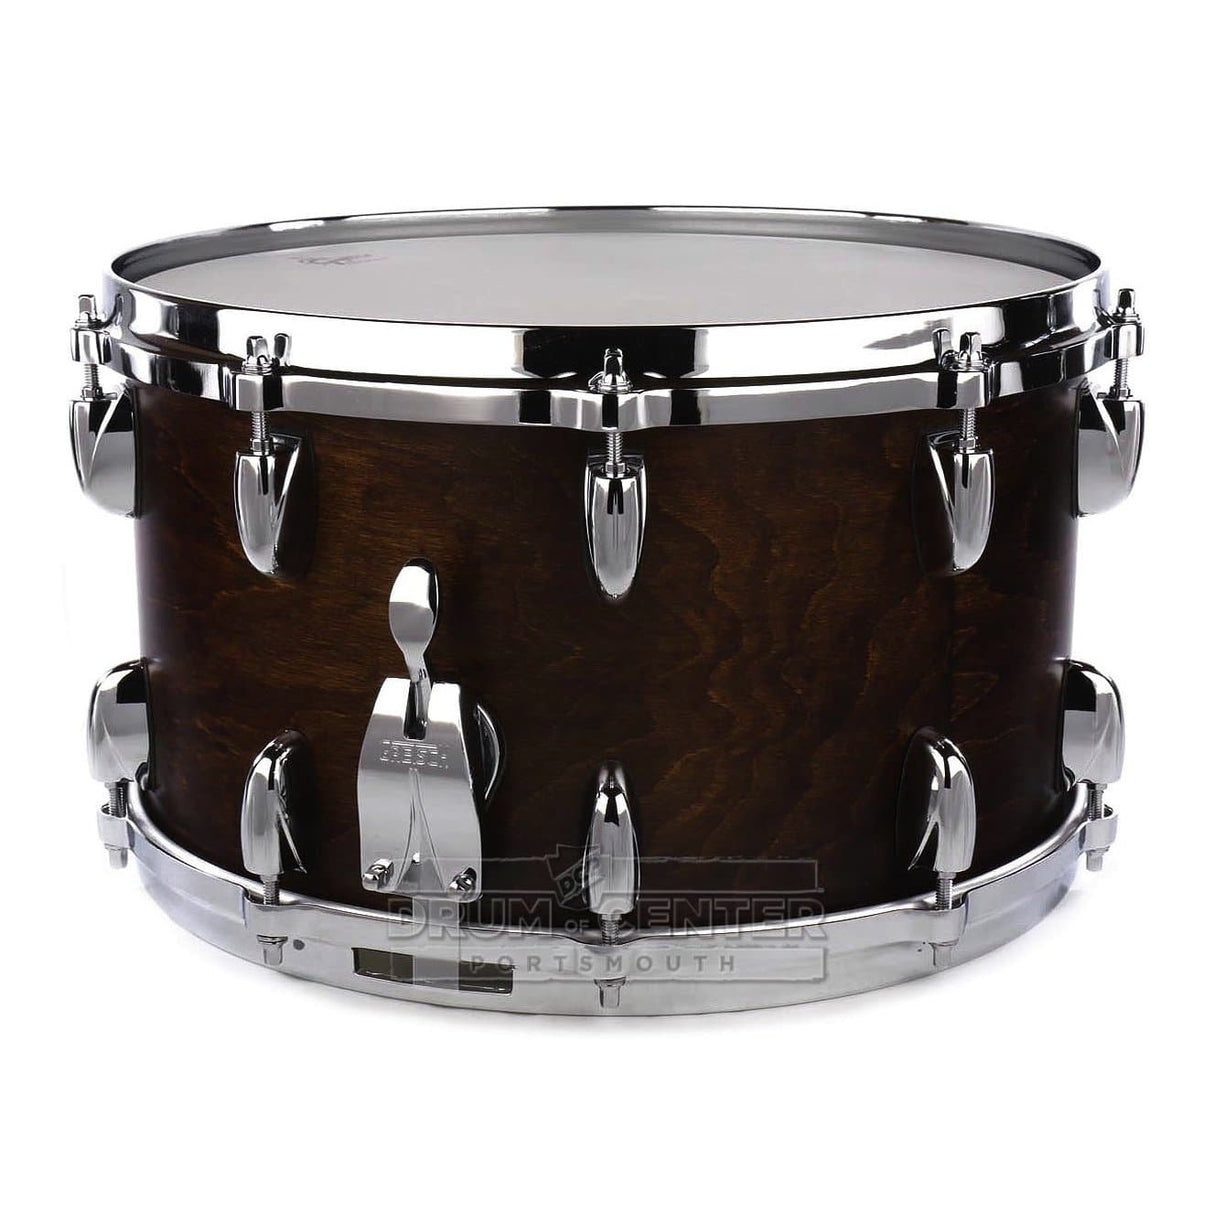 Gretsch USA Custom Snare Drum 14x8 20-Lug Satin Antique Maple